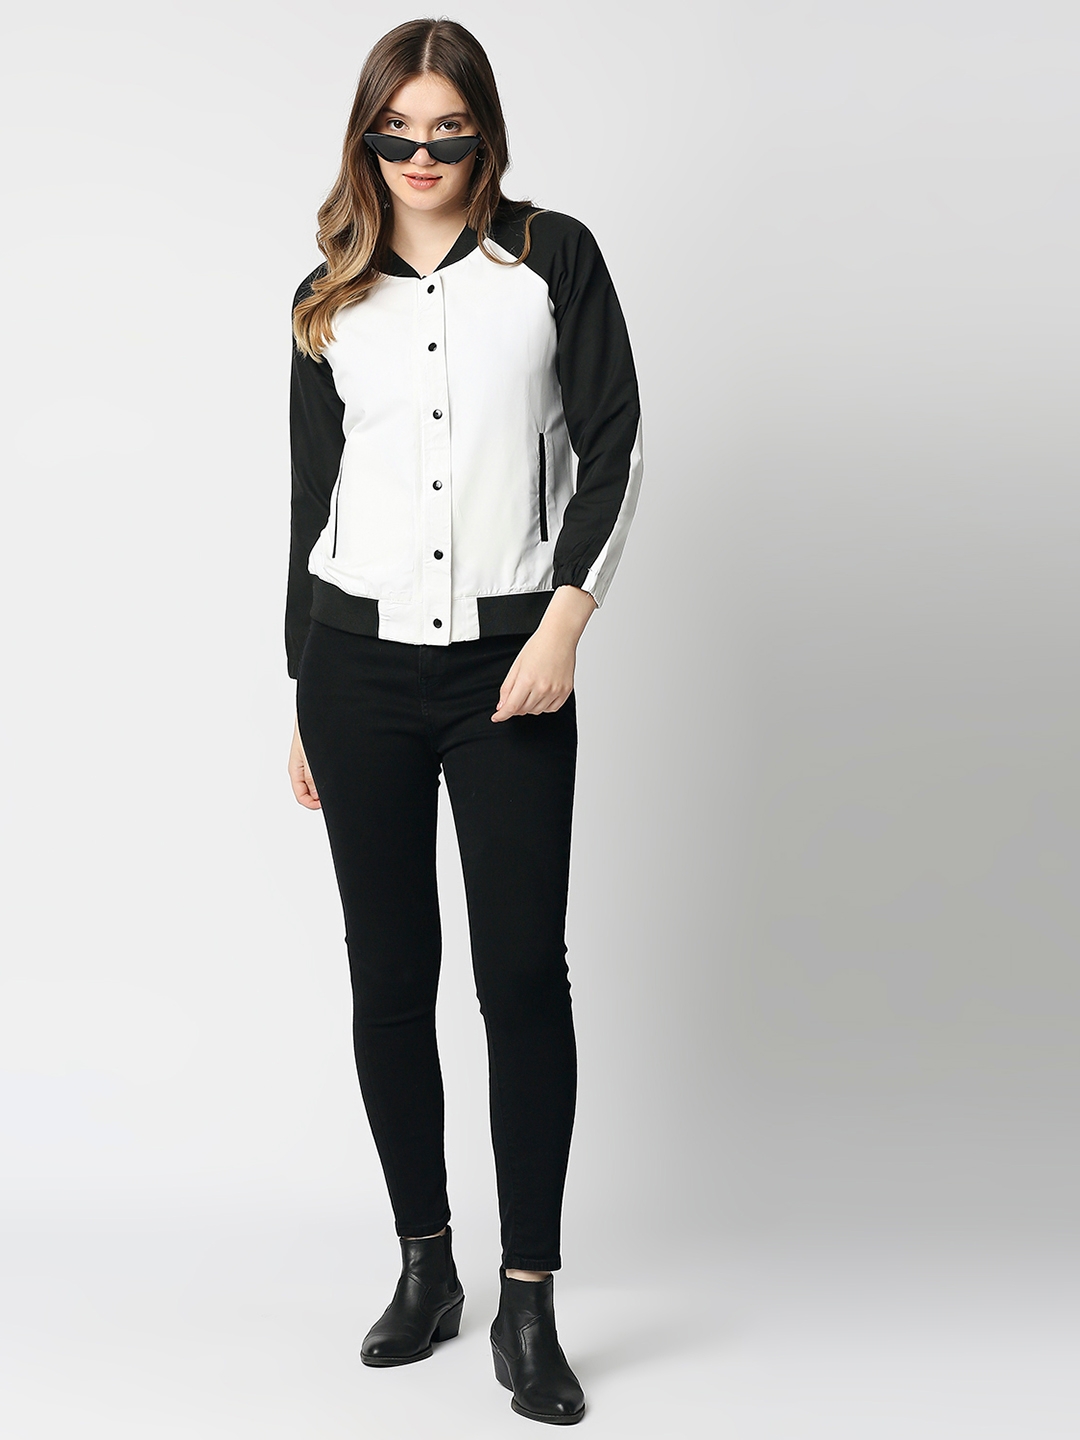 spykar | Women's Black Cotton Solid Skinny Jeans 5